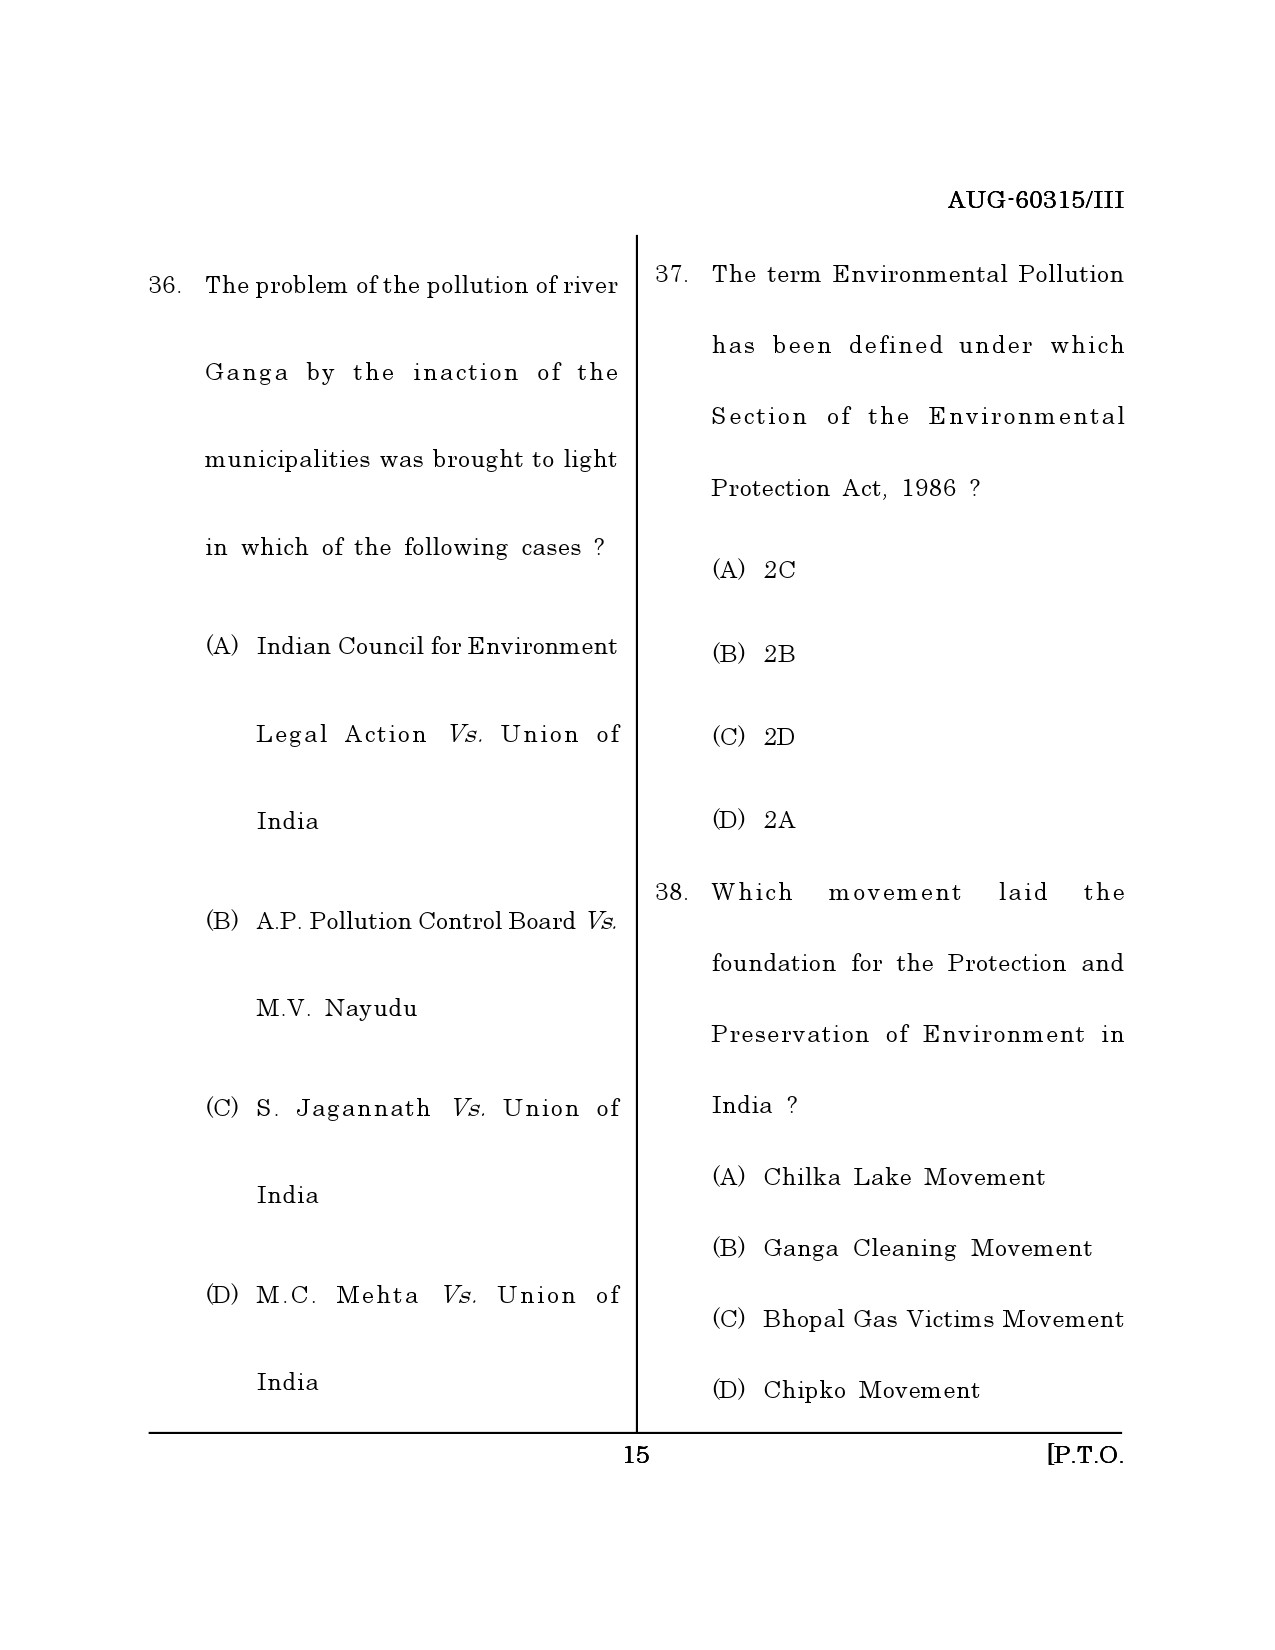 Maharashtra SET Law Question Paper III August 2015 14